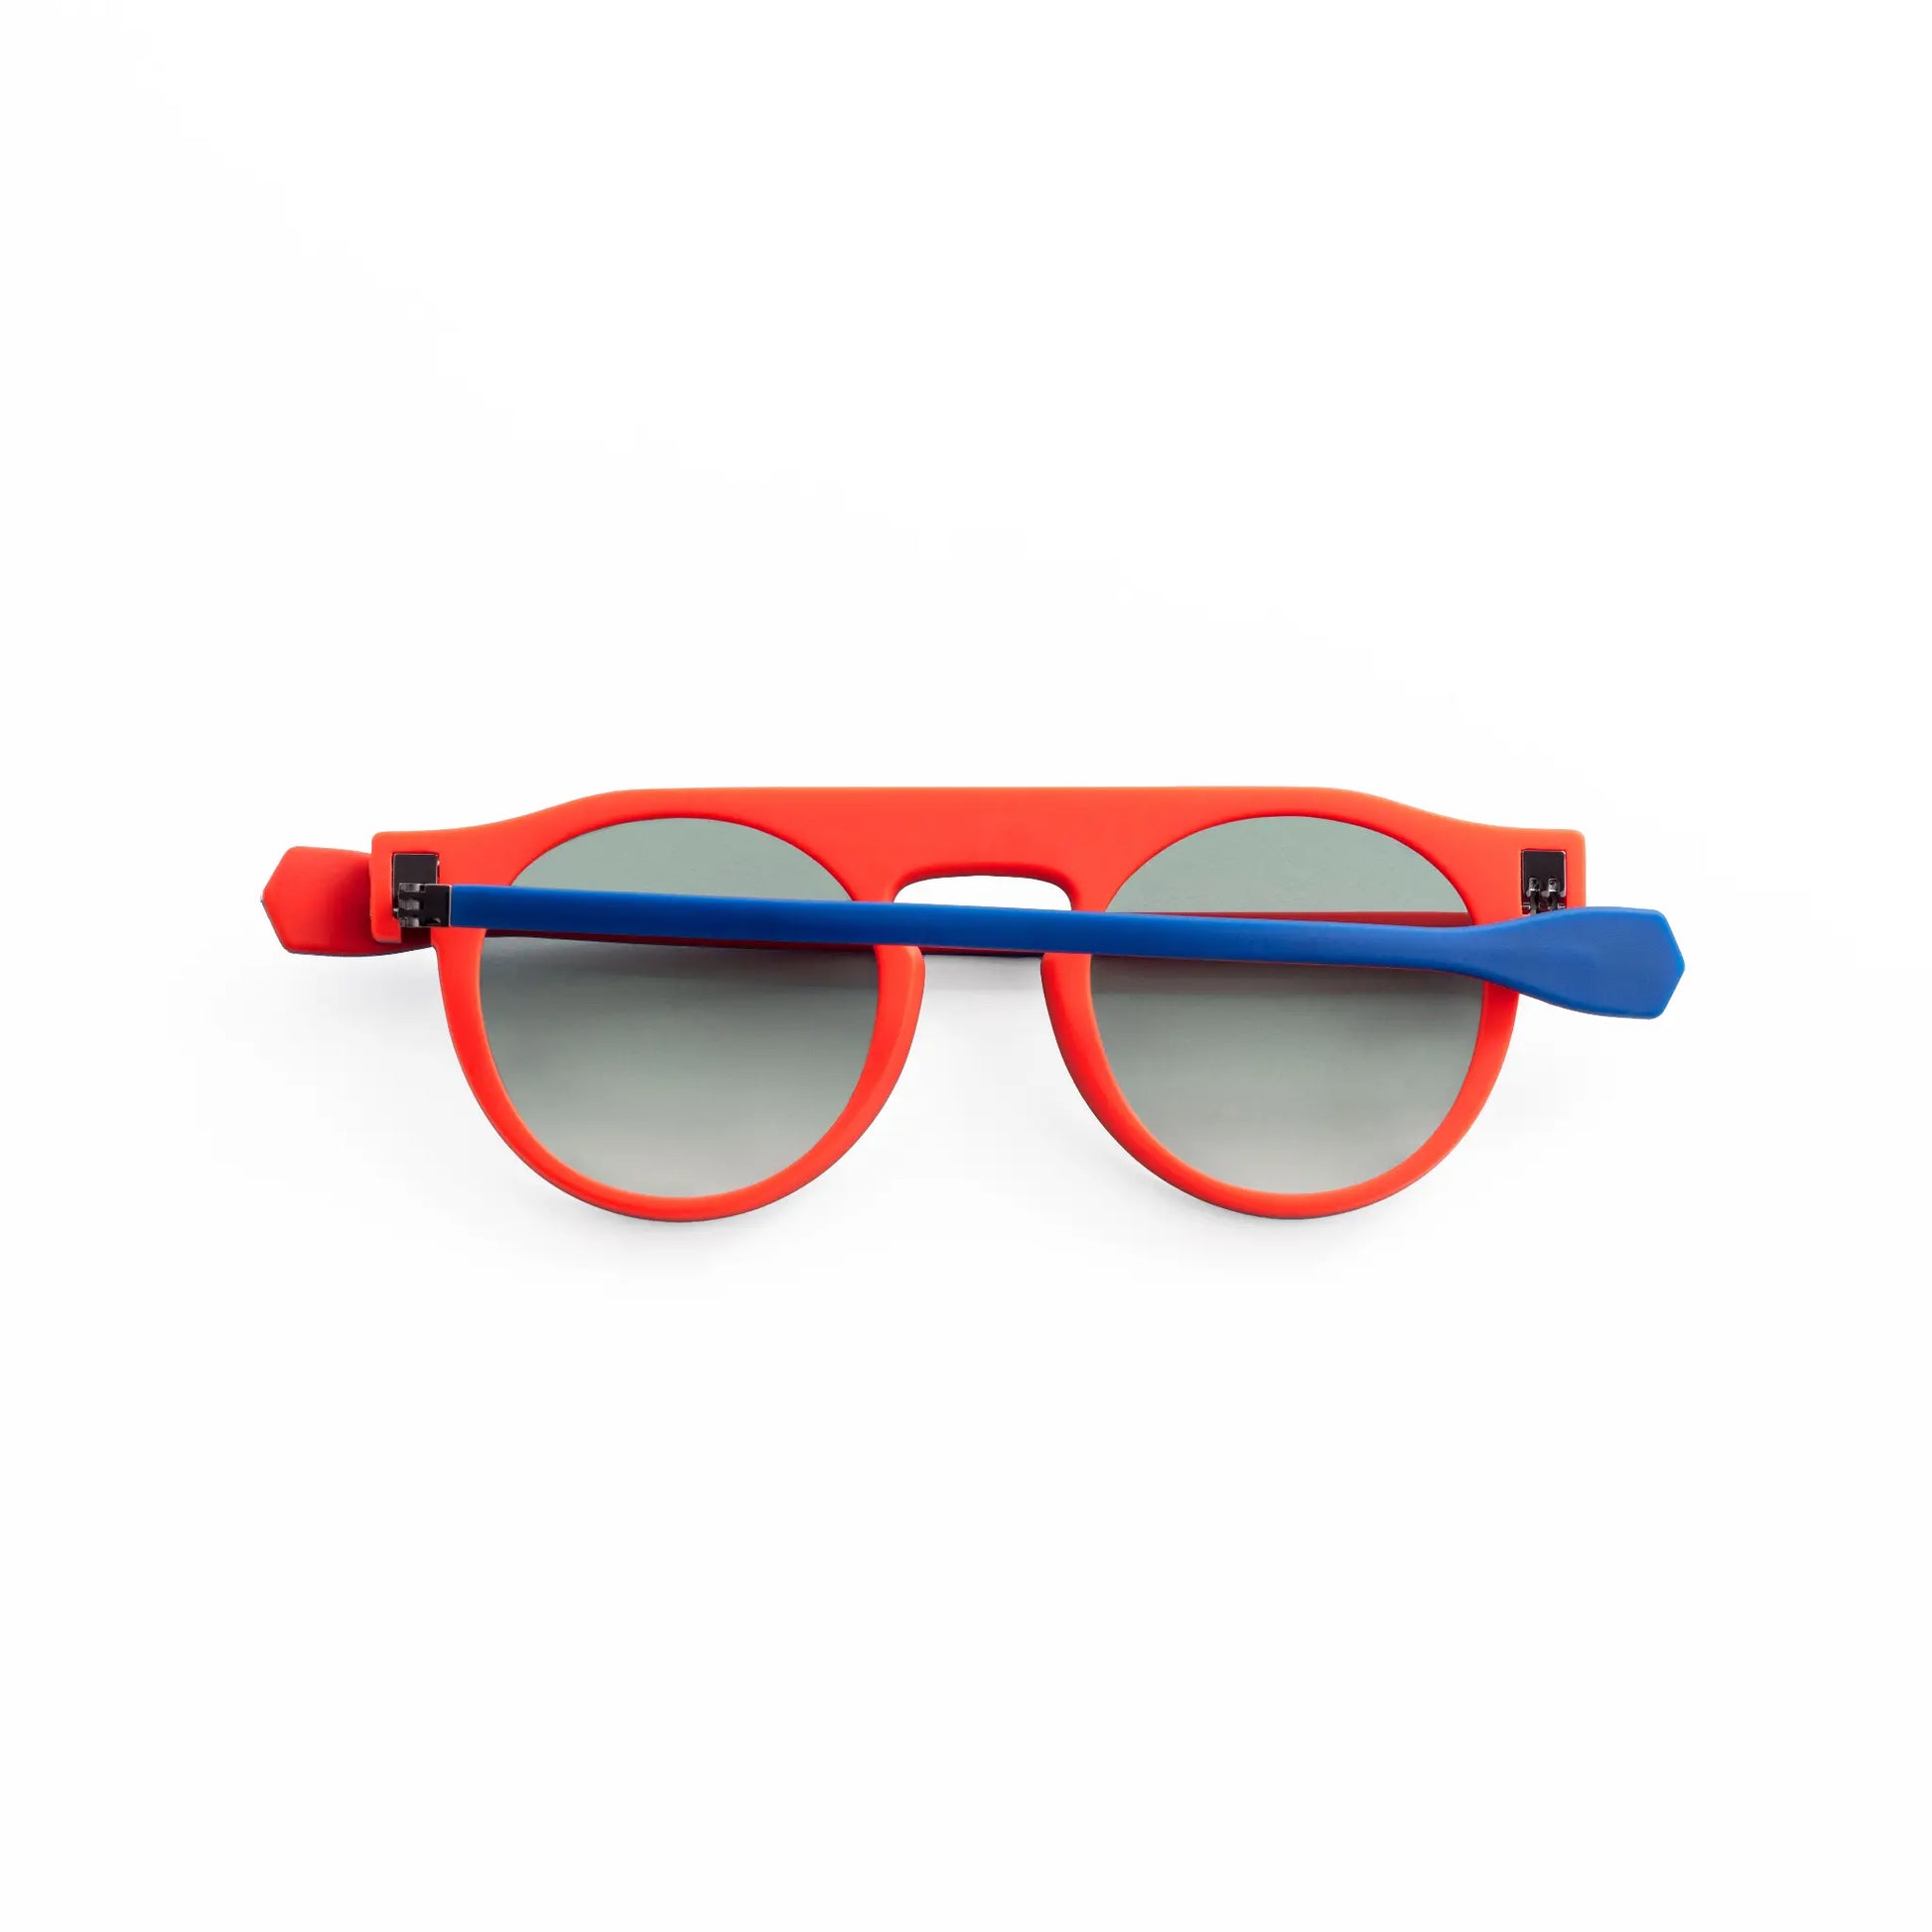 Reverso sunglasses blue & red reversible & ultra light back view